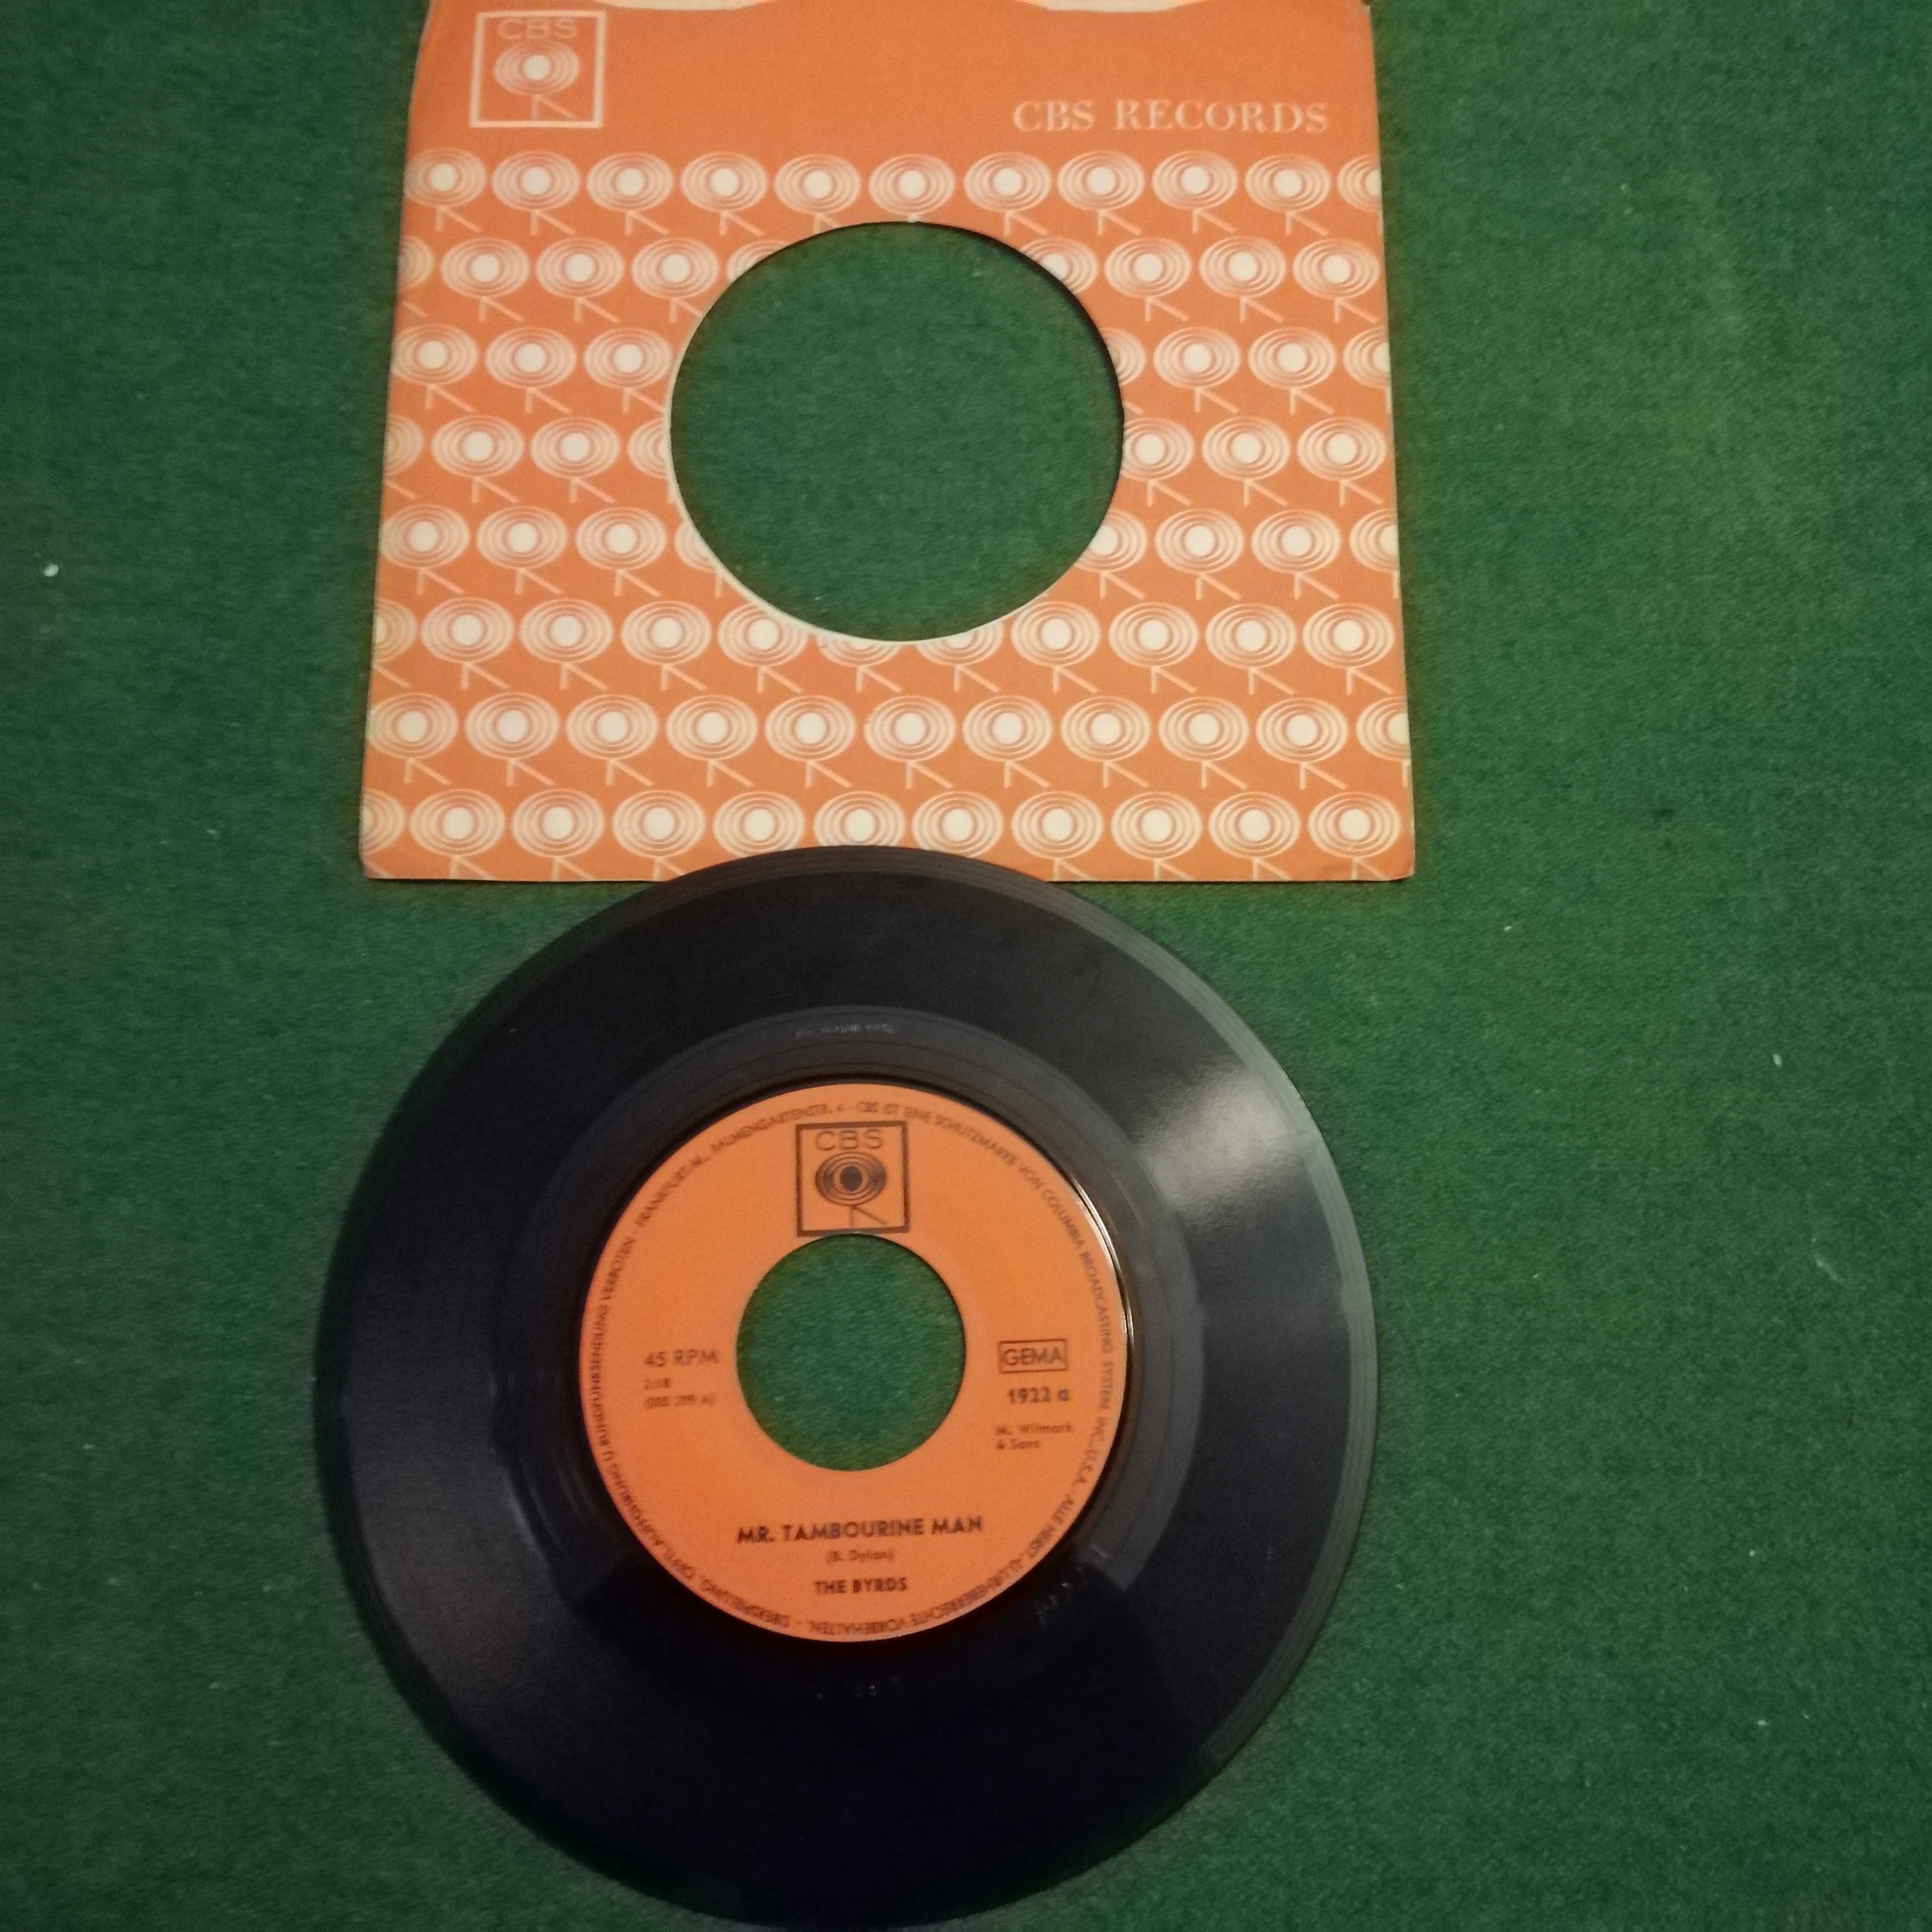 Singiel - The Byrds - Mr. Tambourine Man (Rock, Folk Rock, Pop Rock)